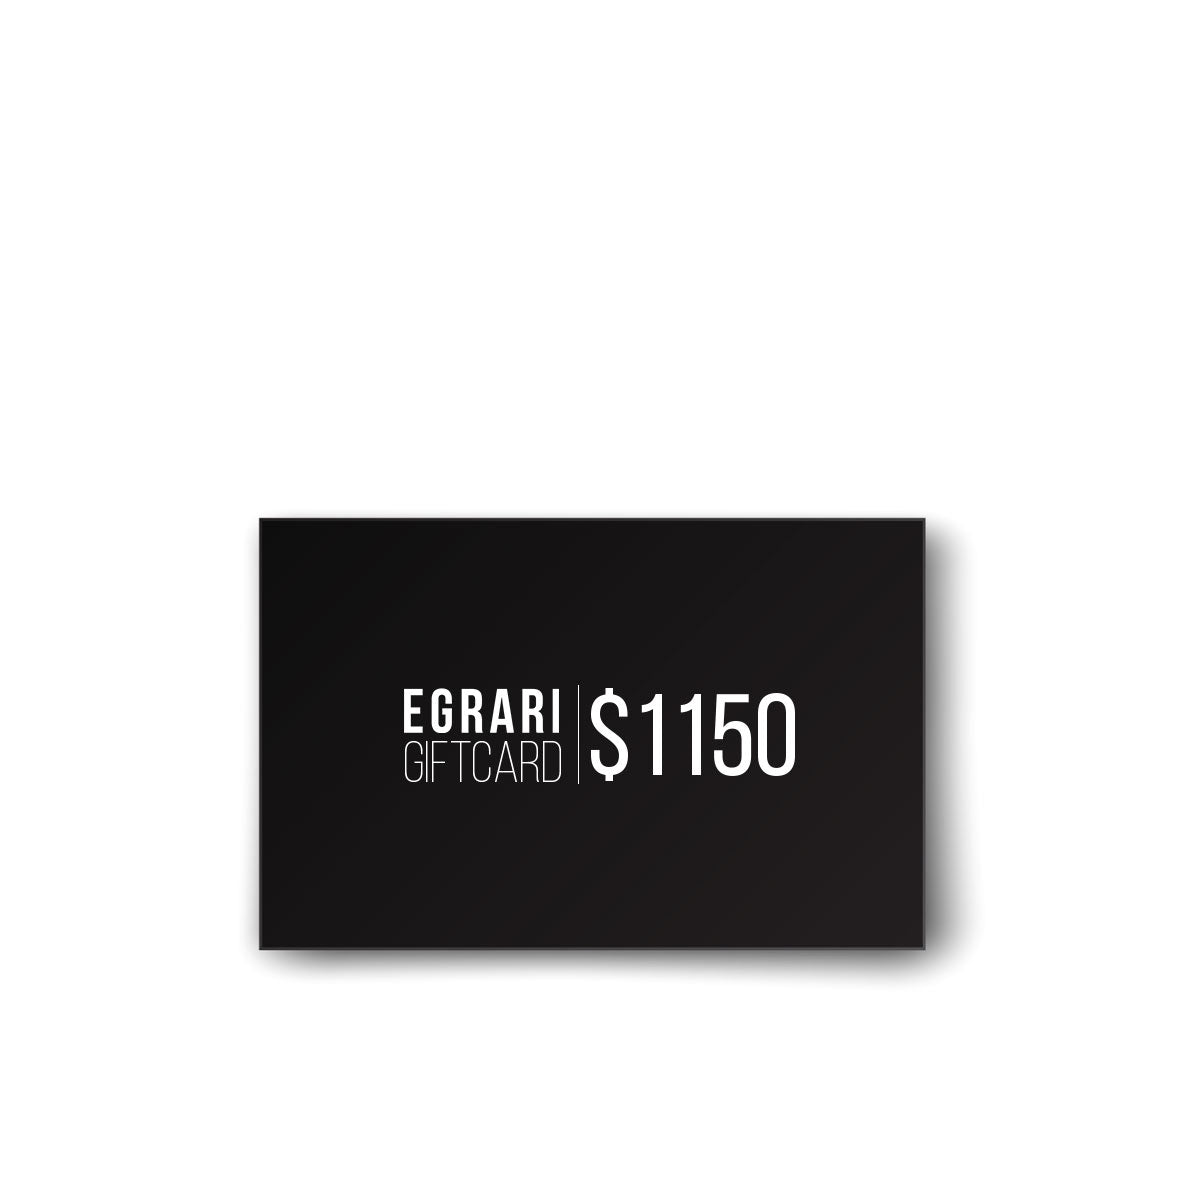 Egrari Night of Beauty gift card save $150